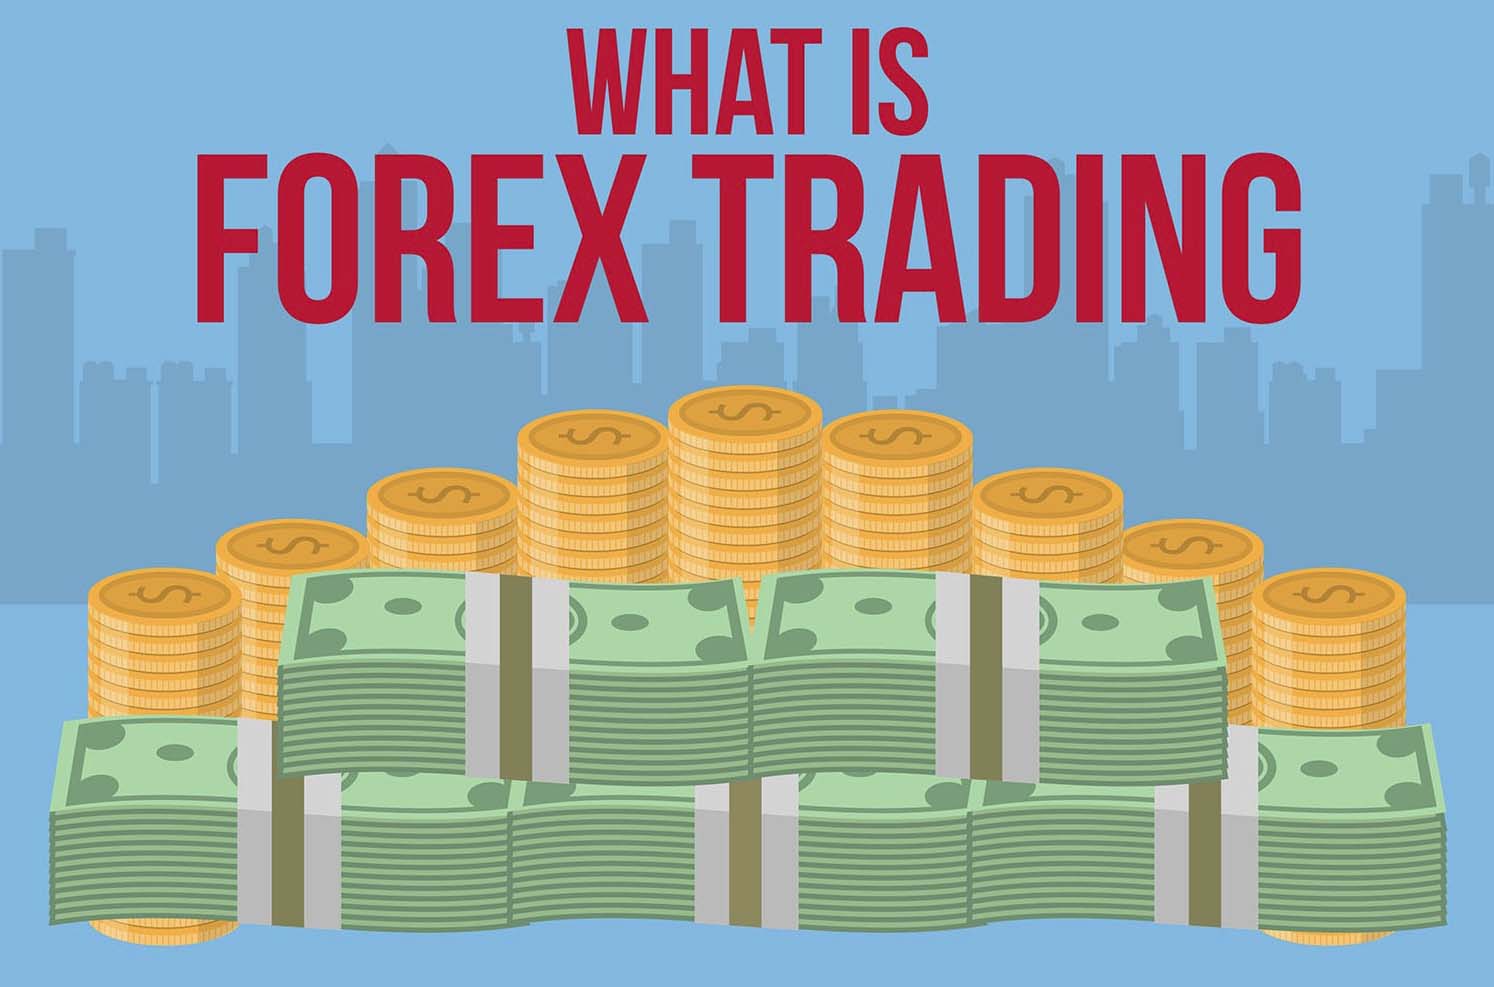 Eforex trading